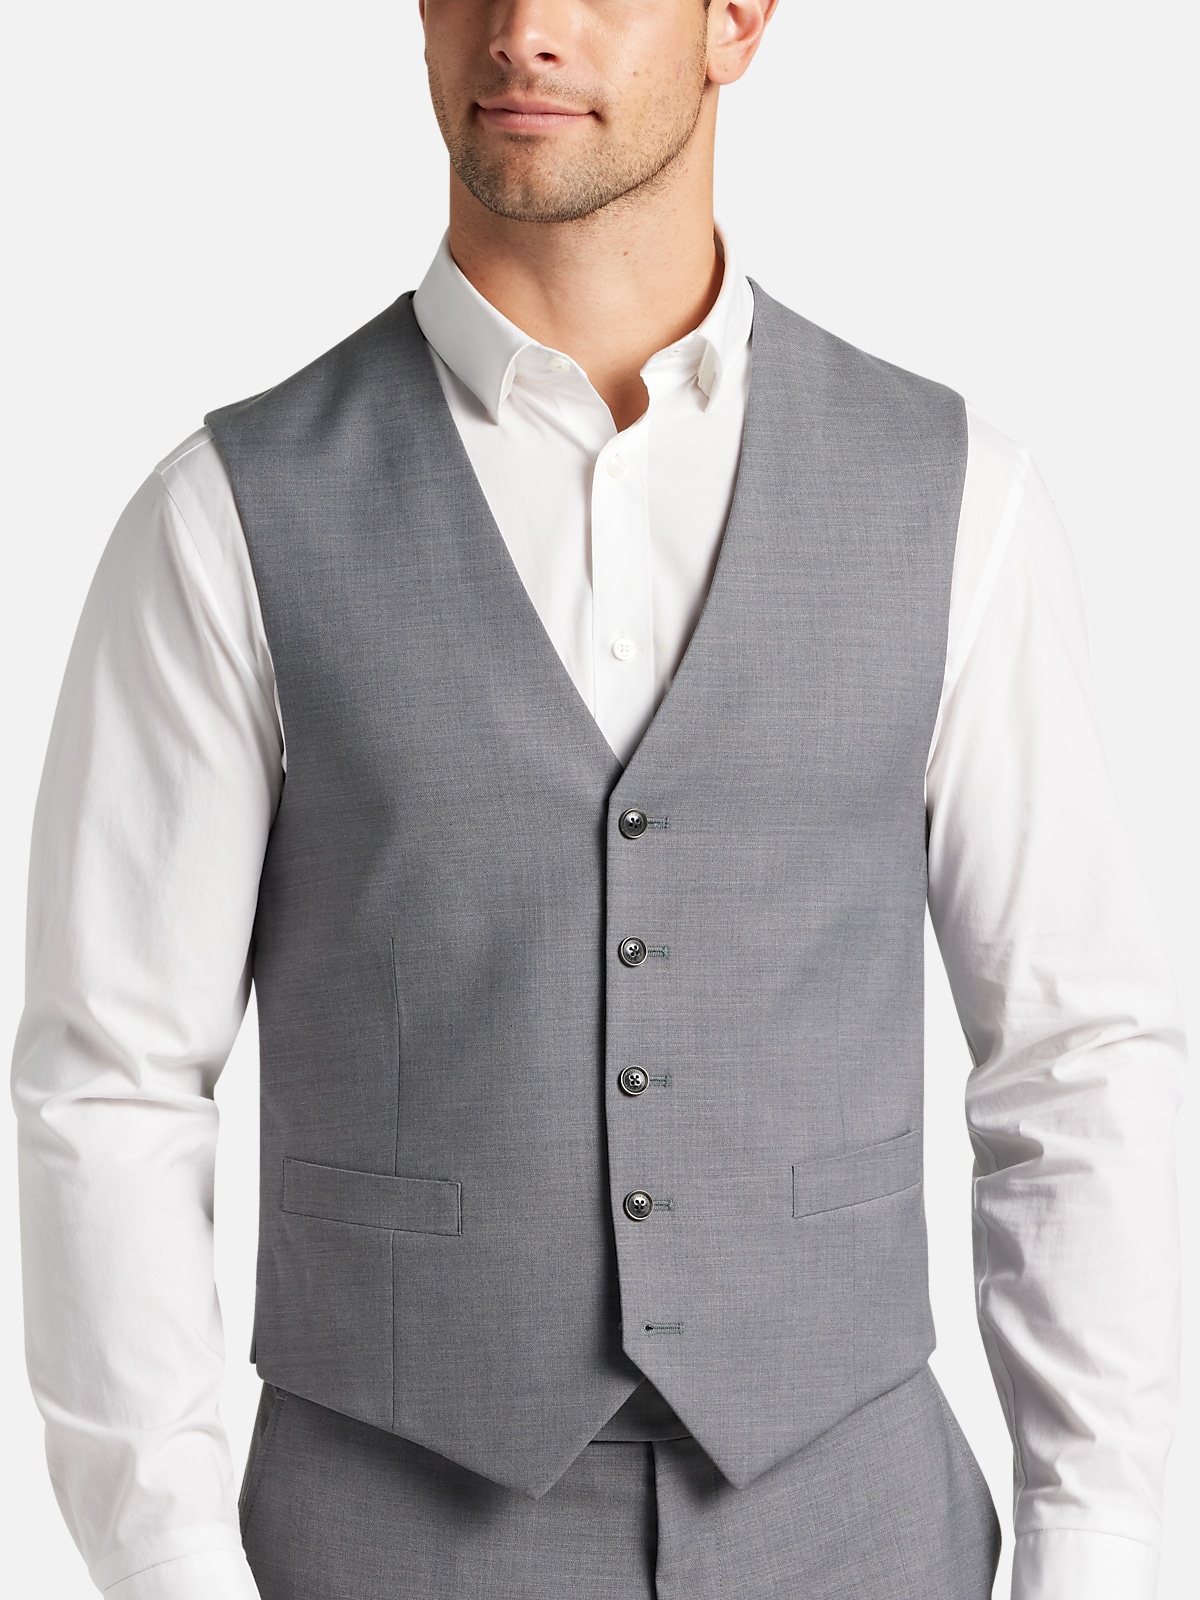 Tommy Hilfiger TH Flex Modern Fit Suit Separates Vest | All Clearance ...